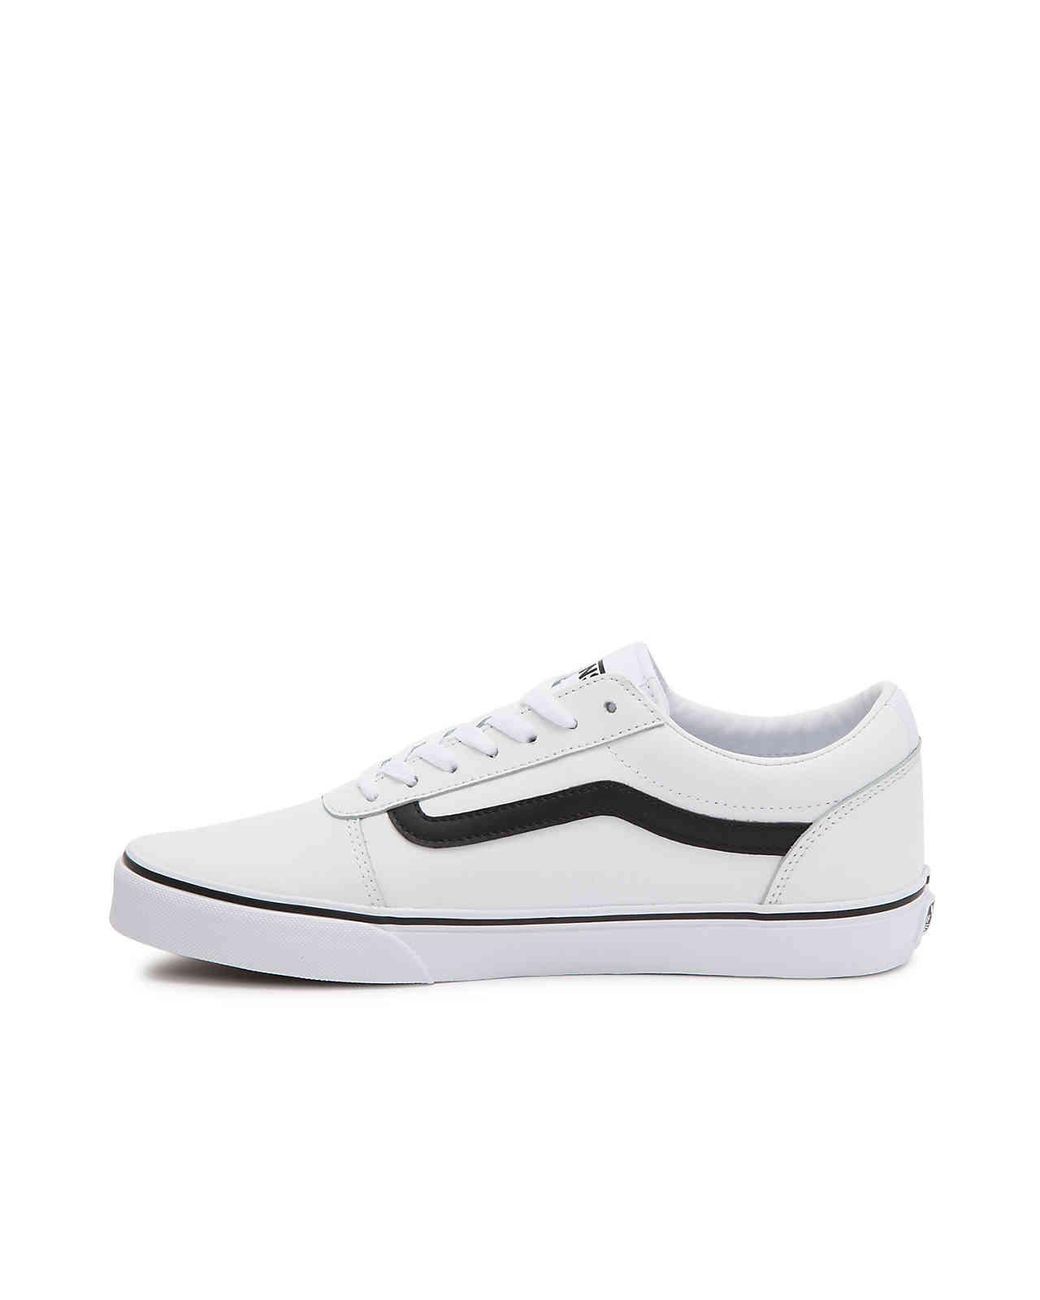 Vans Ward Lo Leather Sneaker in White/Black (White) for Men | Lyst